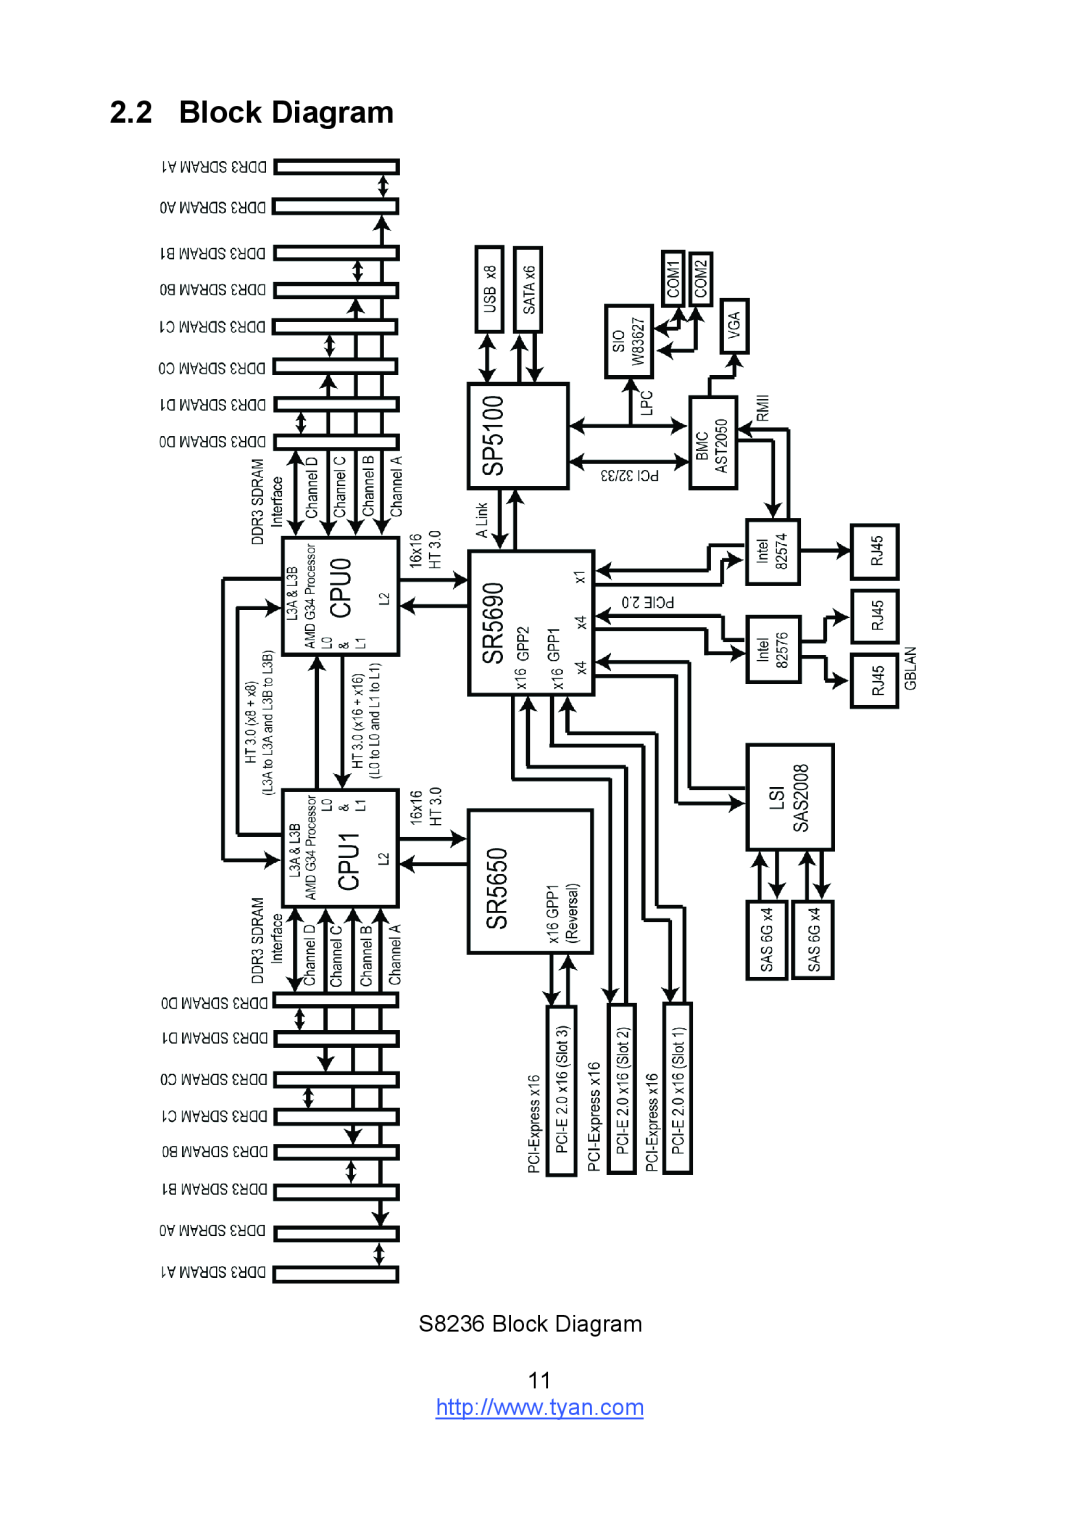 Tyan Computer warranty S8236 Block Diagram 